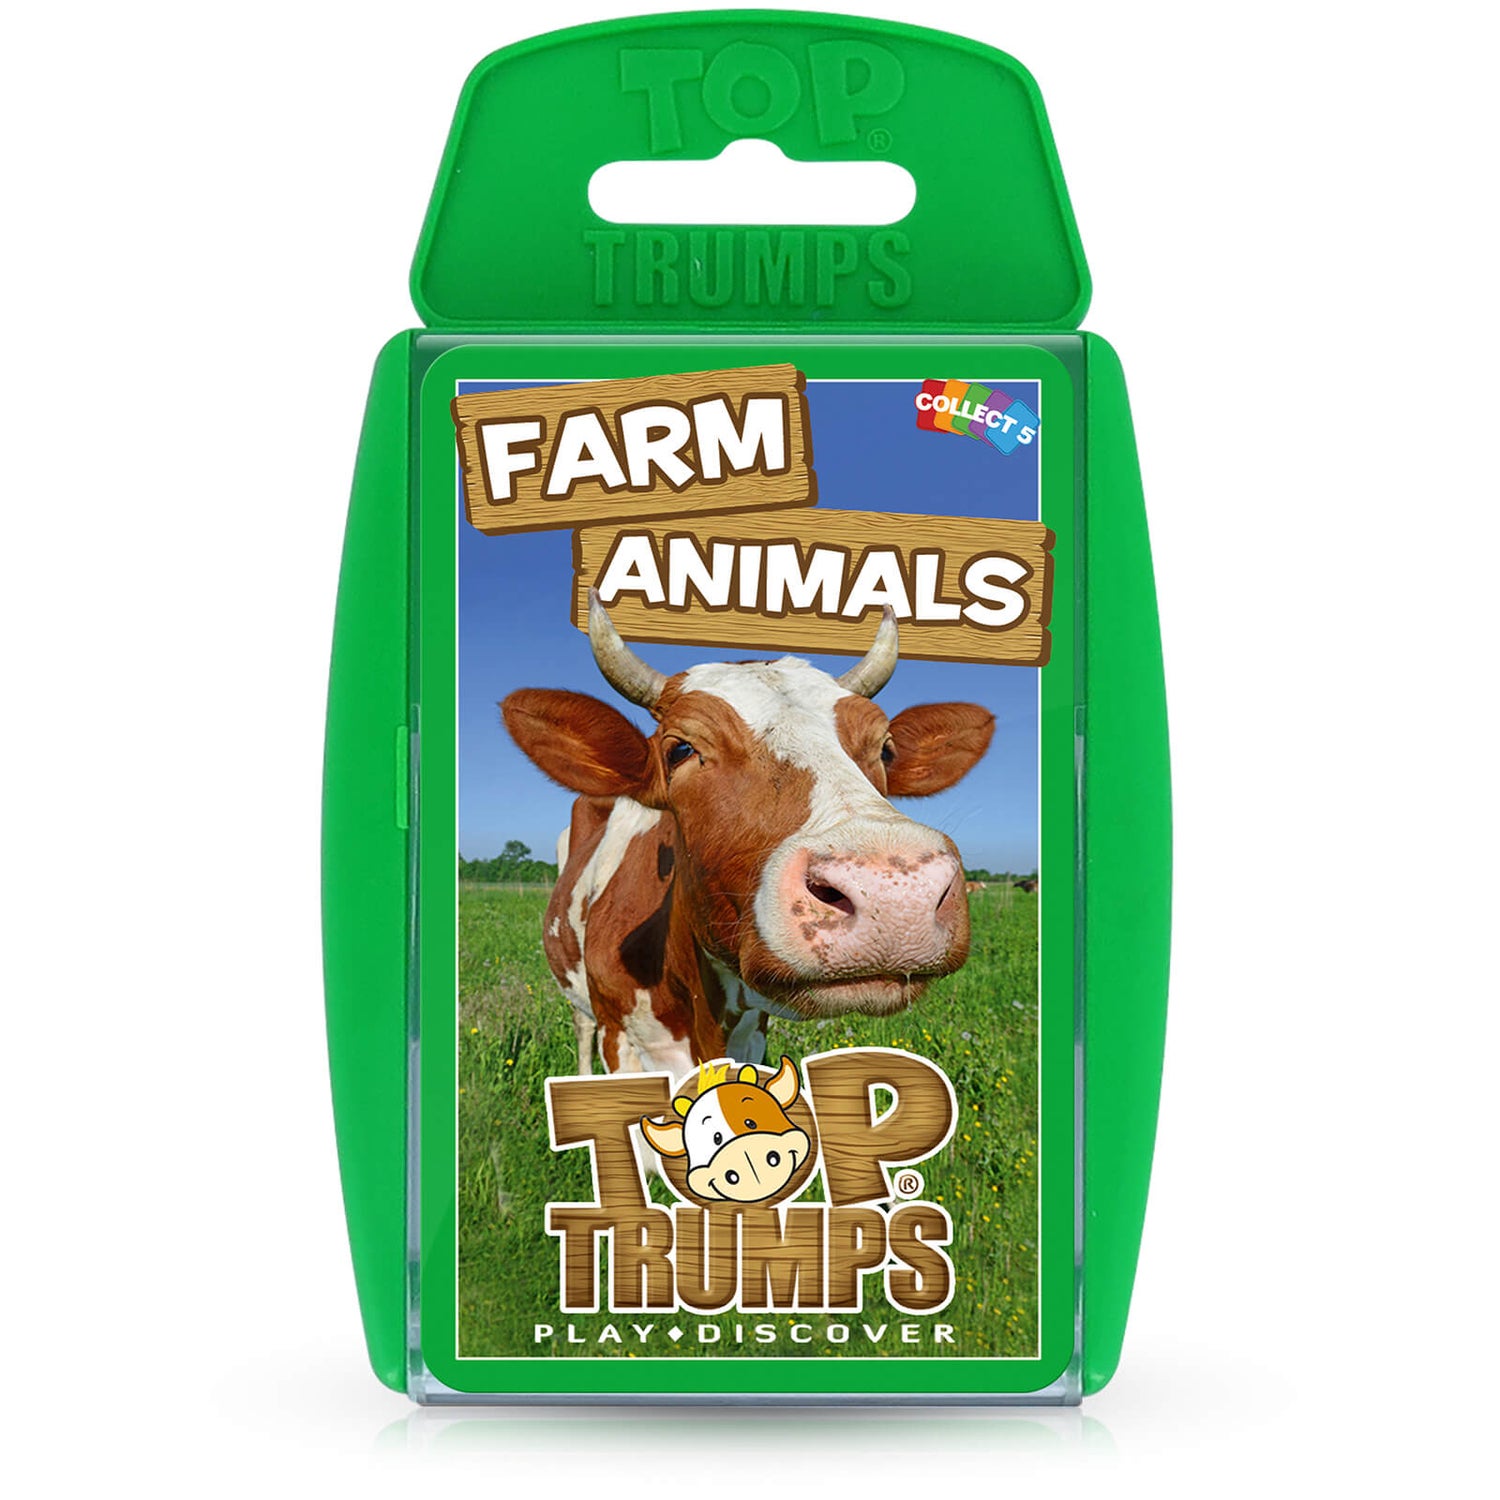 Top Trumps Card Game - Farm Animals Edition